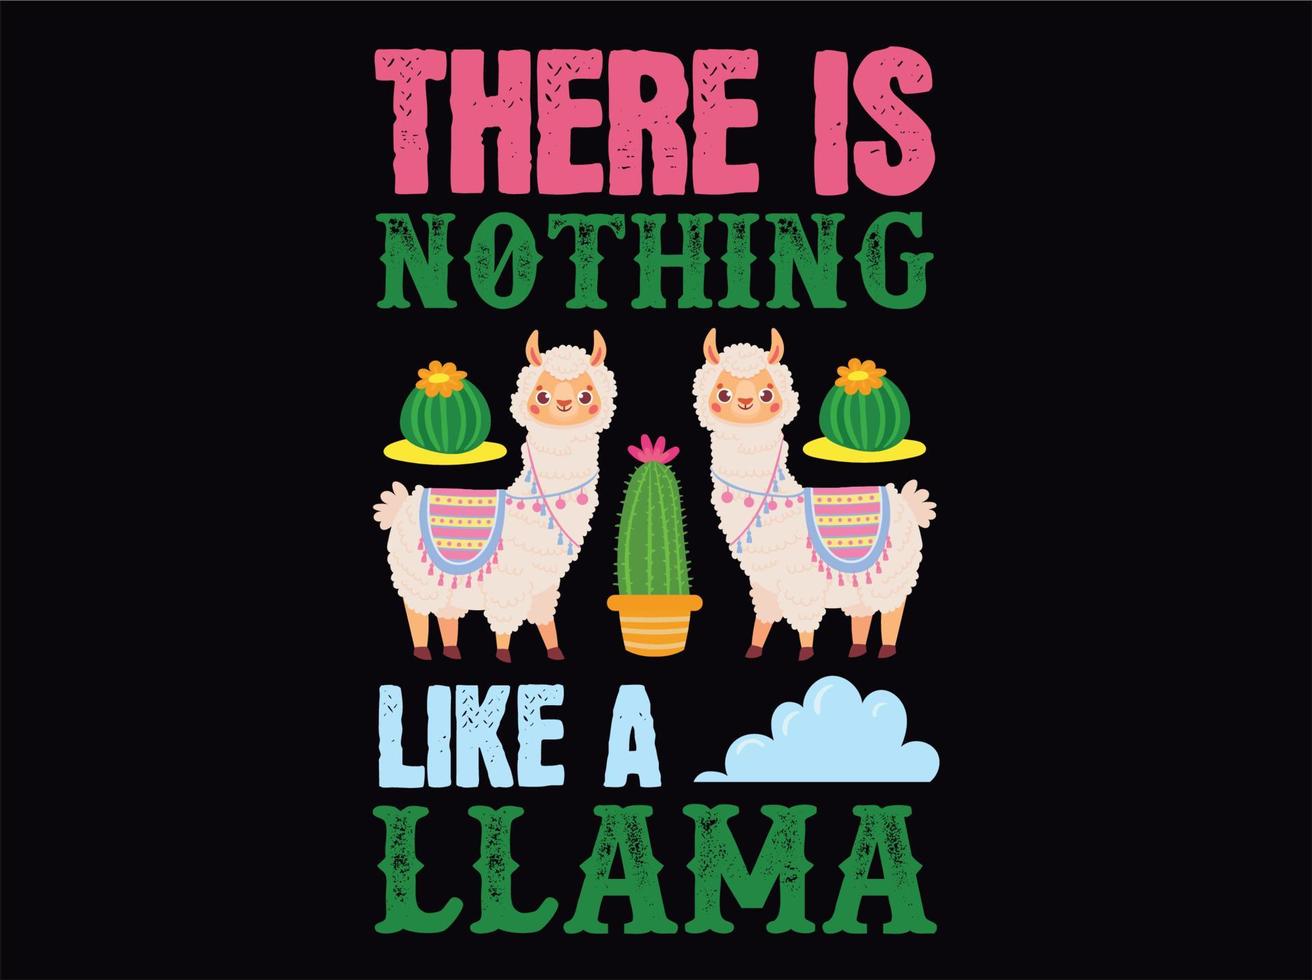 Llama t-shirt design vectot file vector